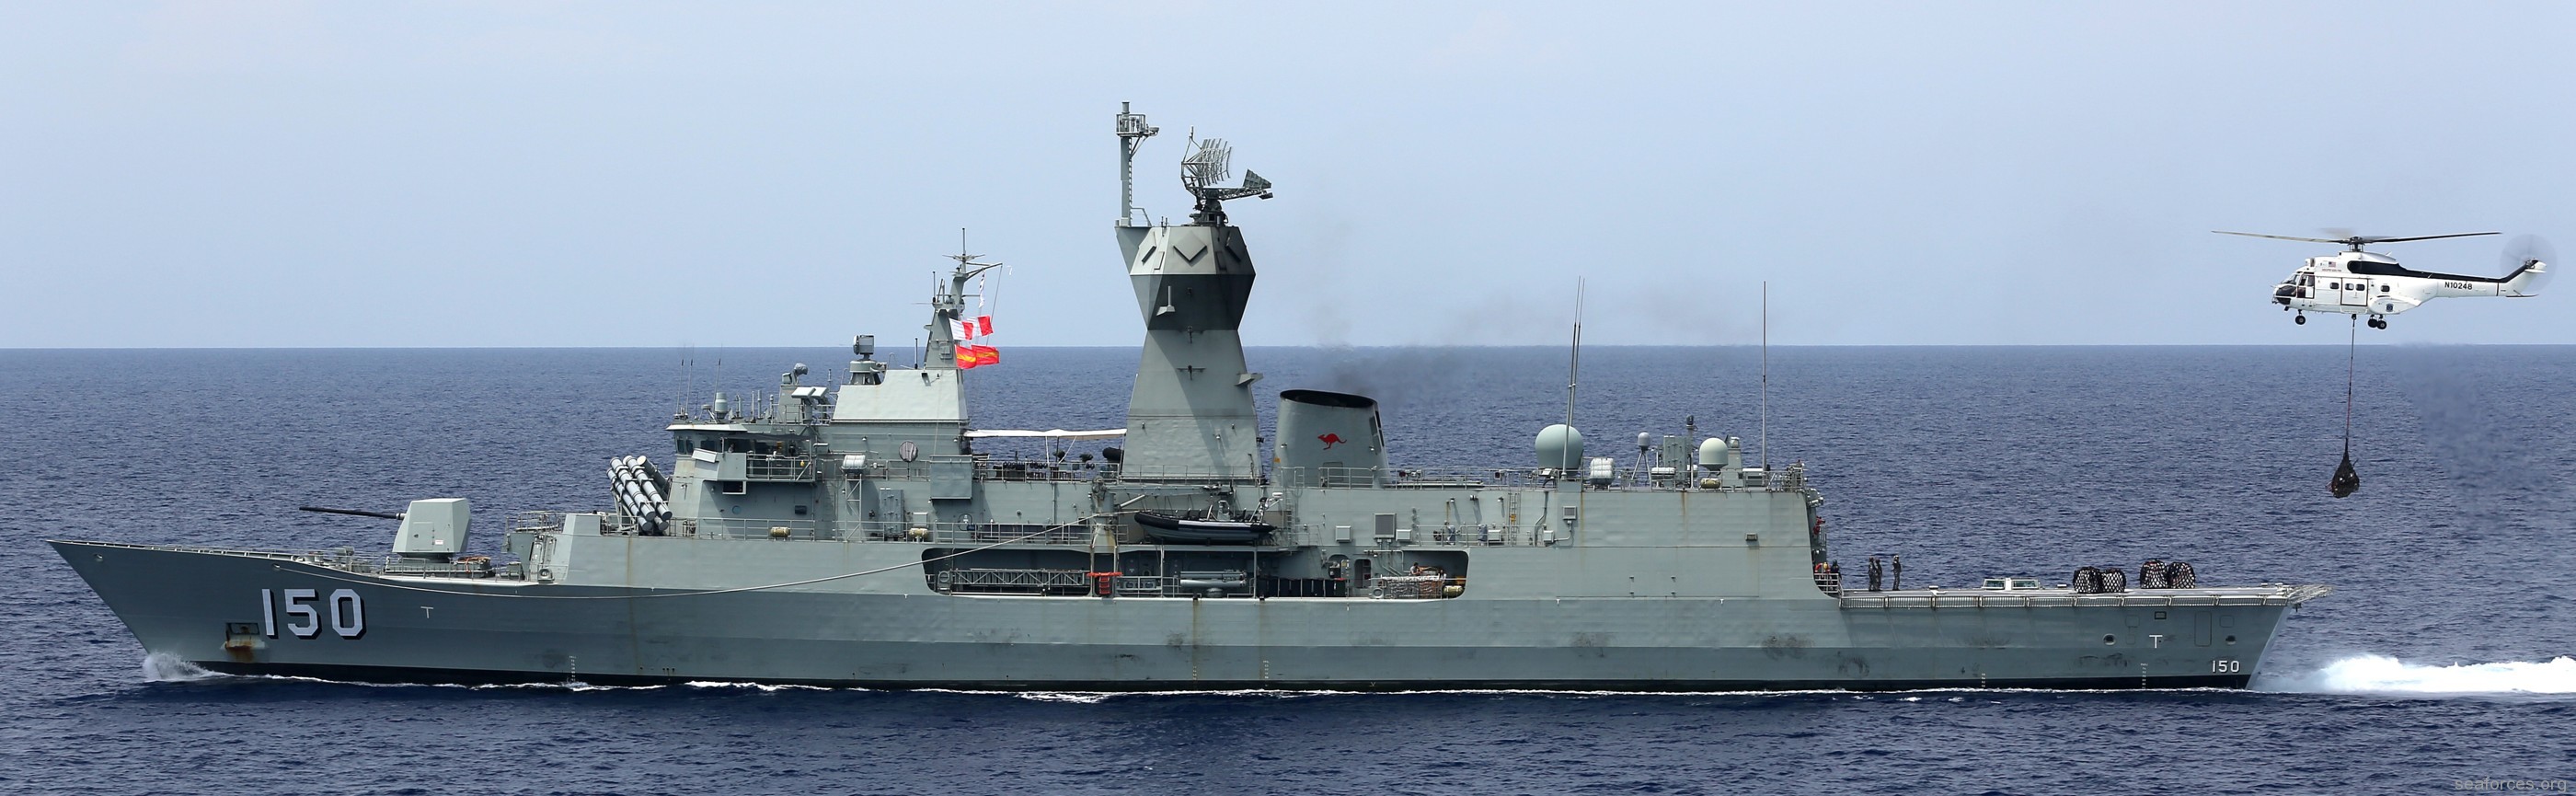 hmas anzac ffh-150 frigate royal australian navy